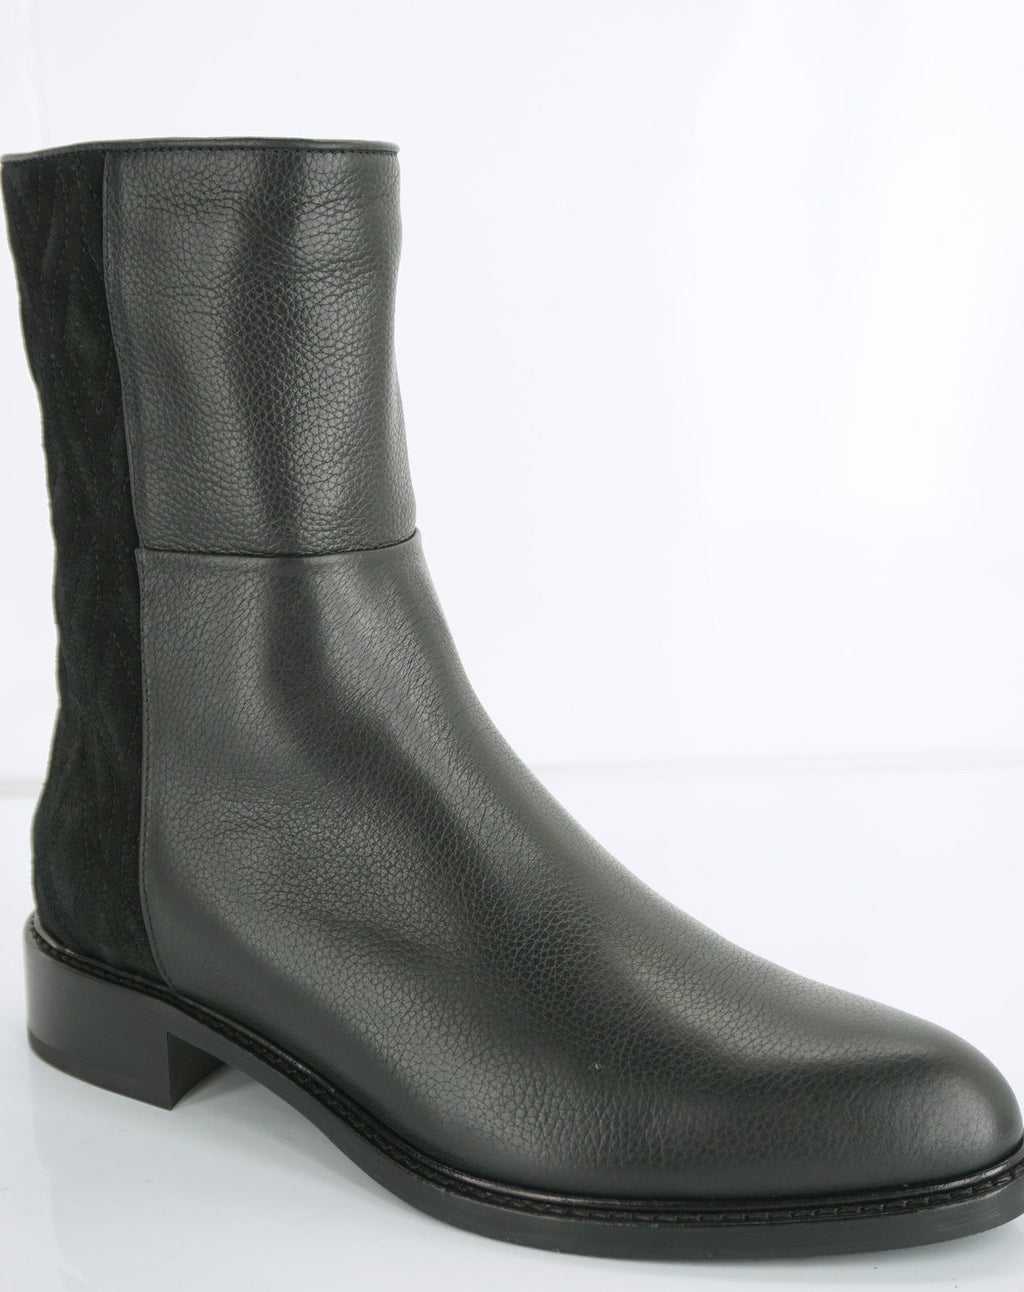 Aquatalia Black Suede Back Leather Gabrina Biker Ankle Boots Size 36.5 New $595